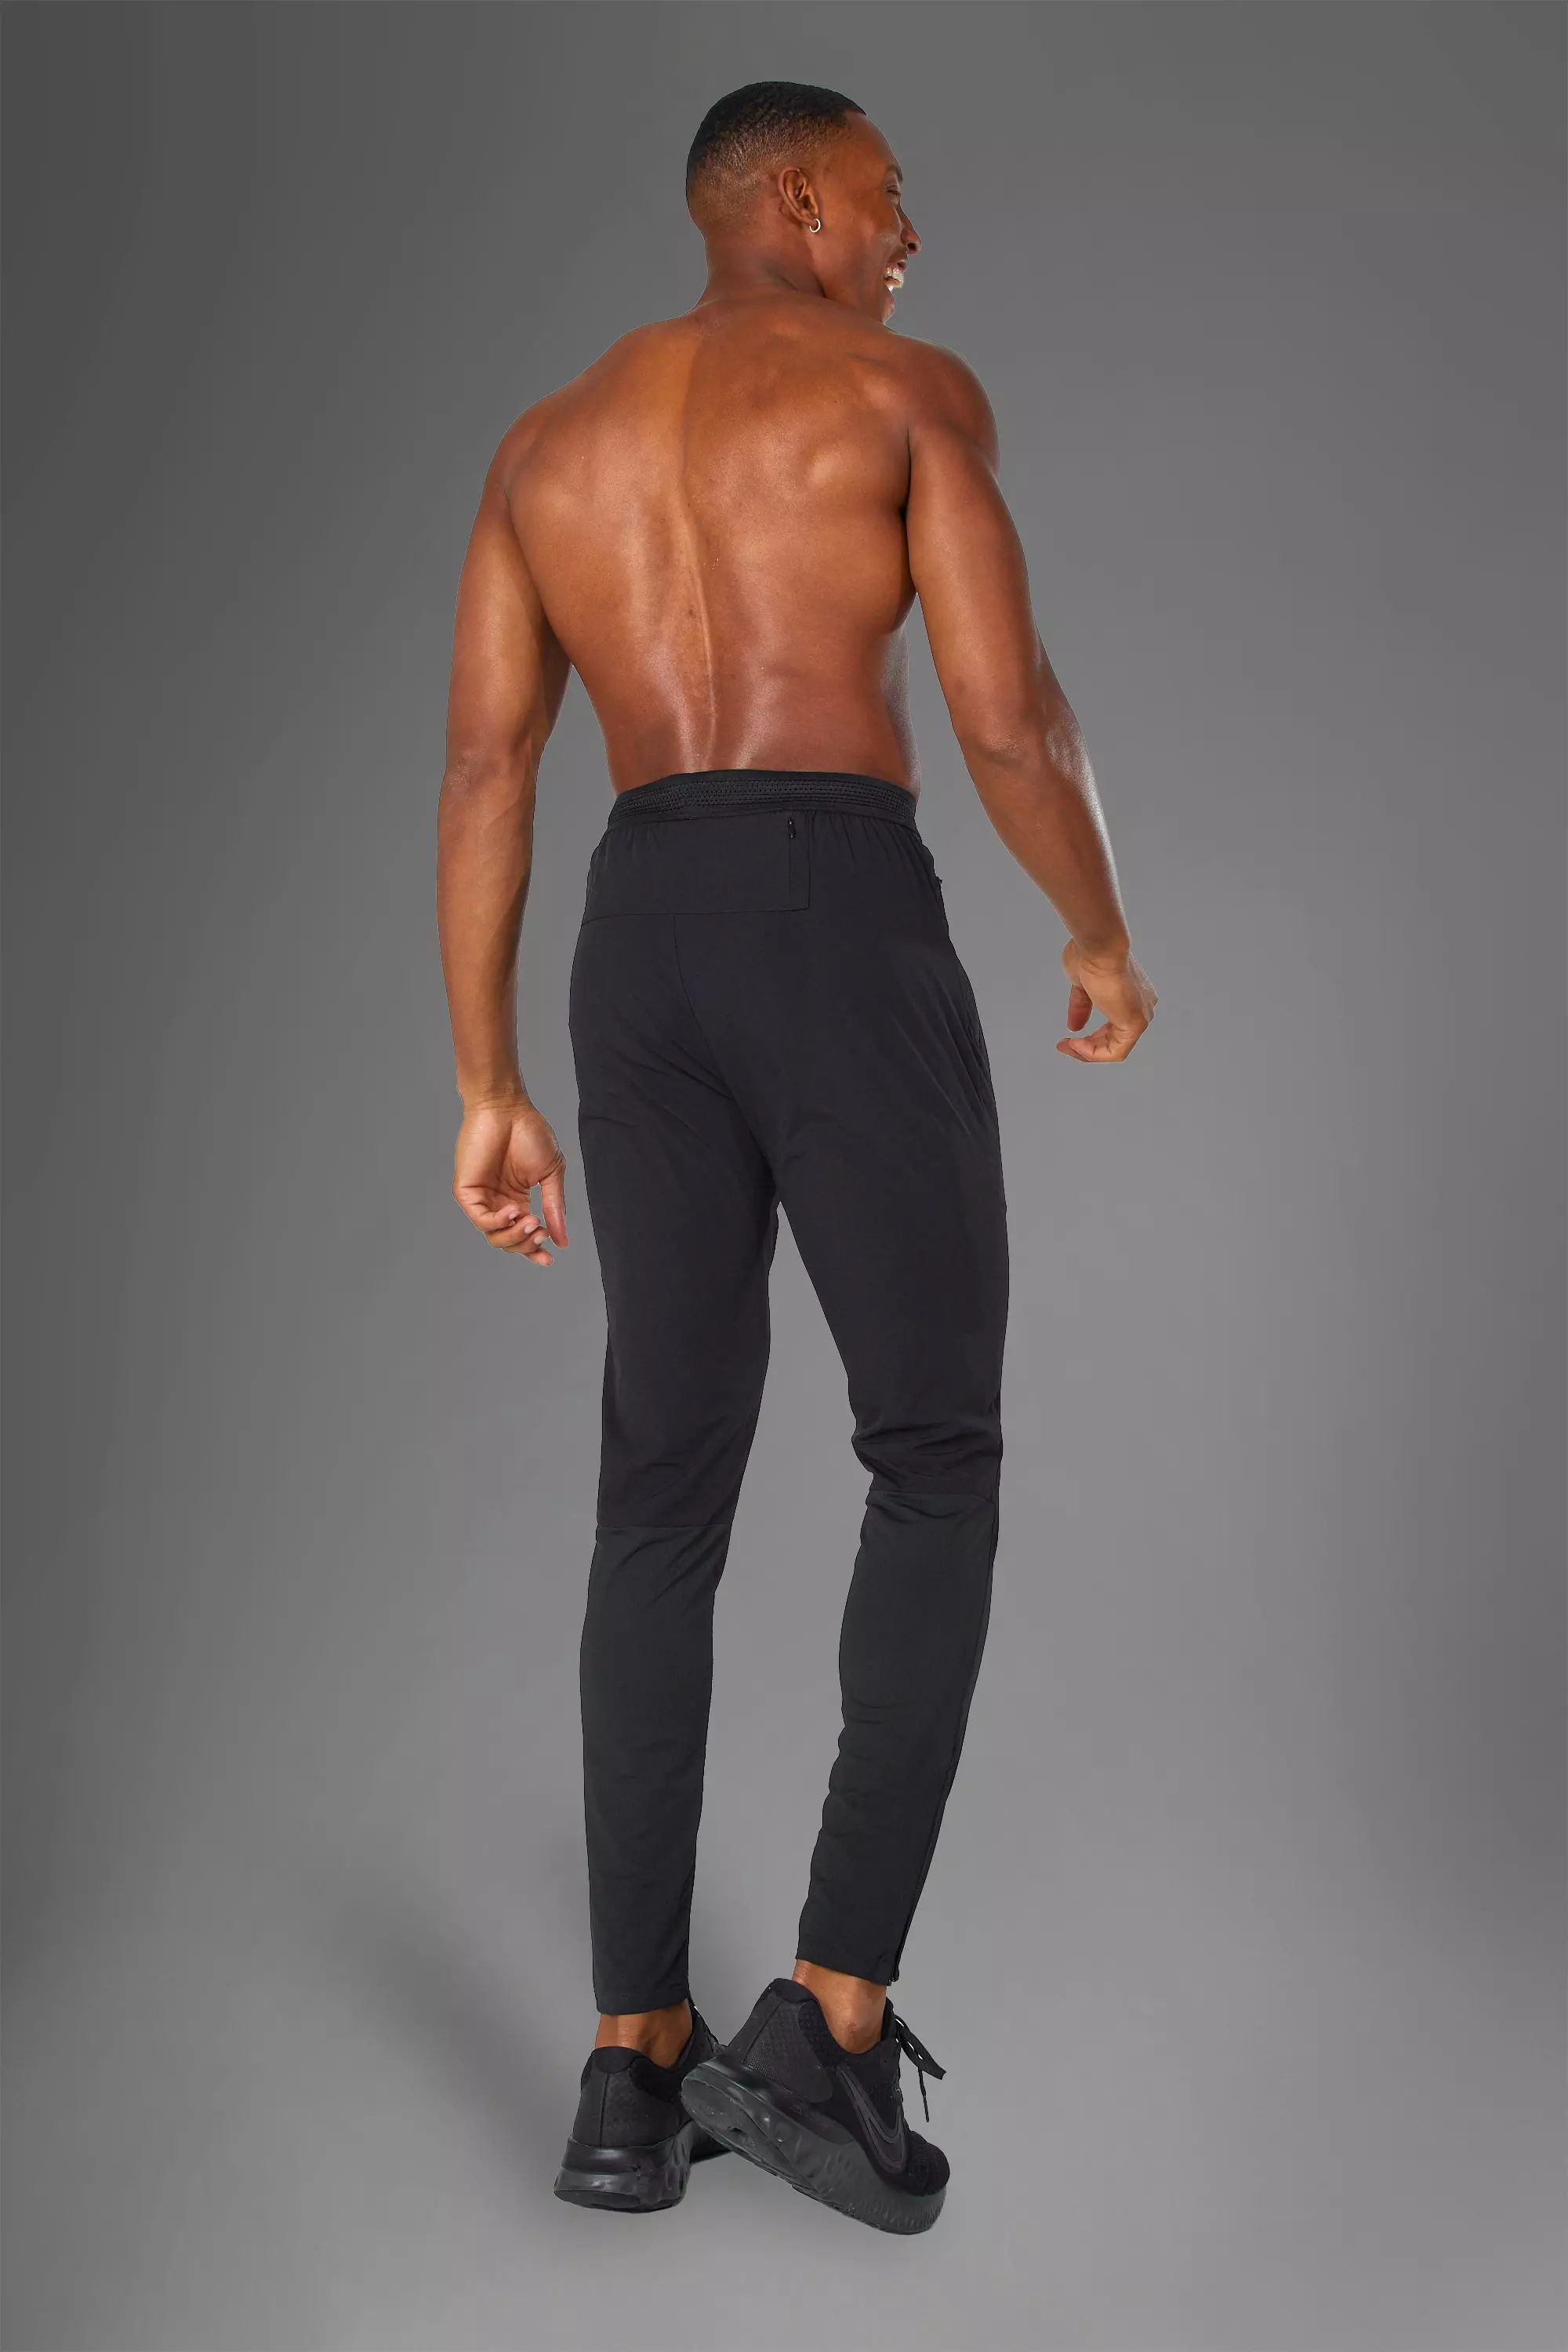 TOWED22 Mens Sweatpants Open Bottom,Men's Joggers Sweatpants,Men's Basic  Active Jogger Pants-Regular and Big & Tall Sizes Gym Sports Pants Khaki,3XL  